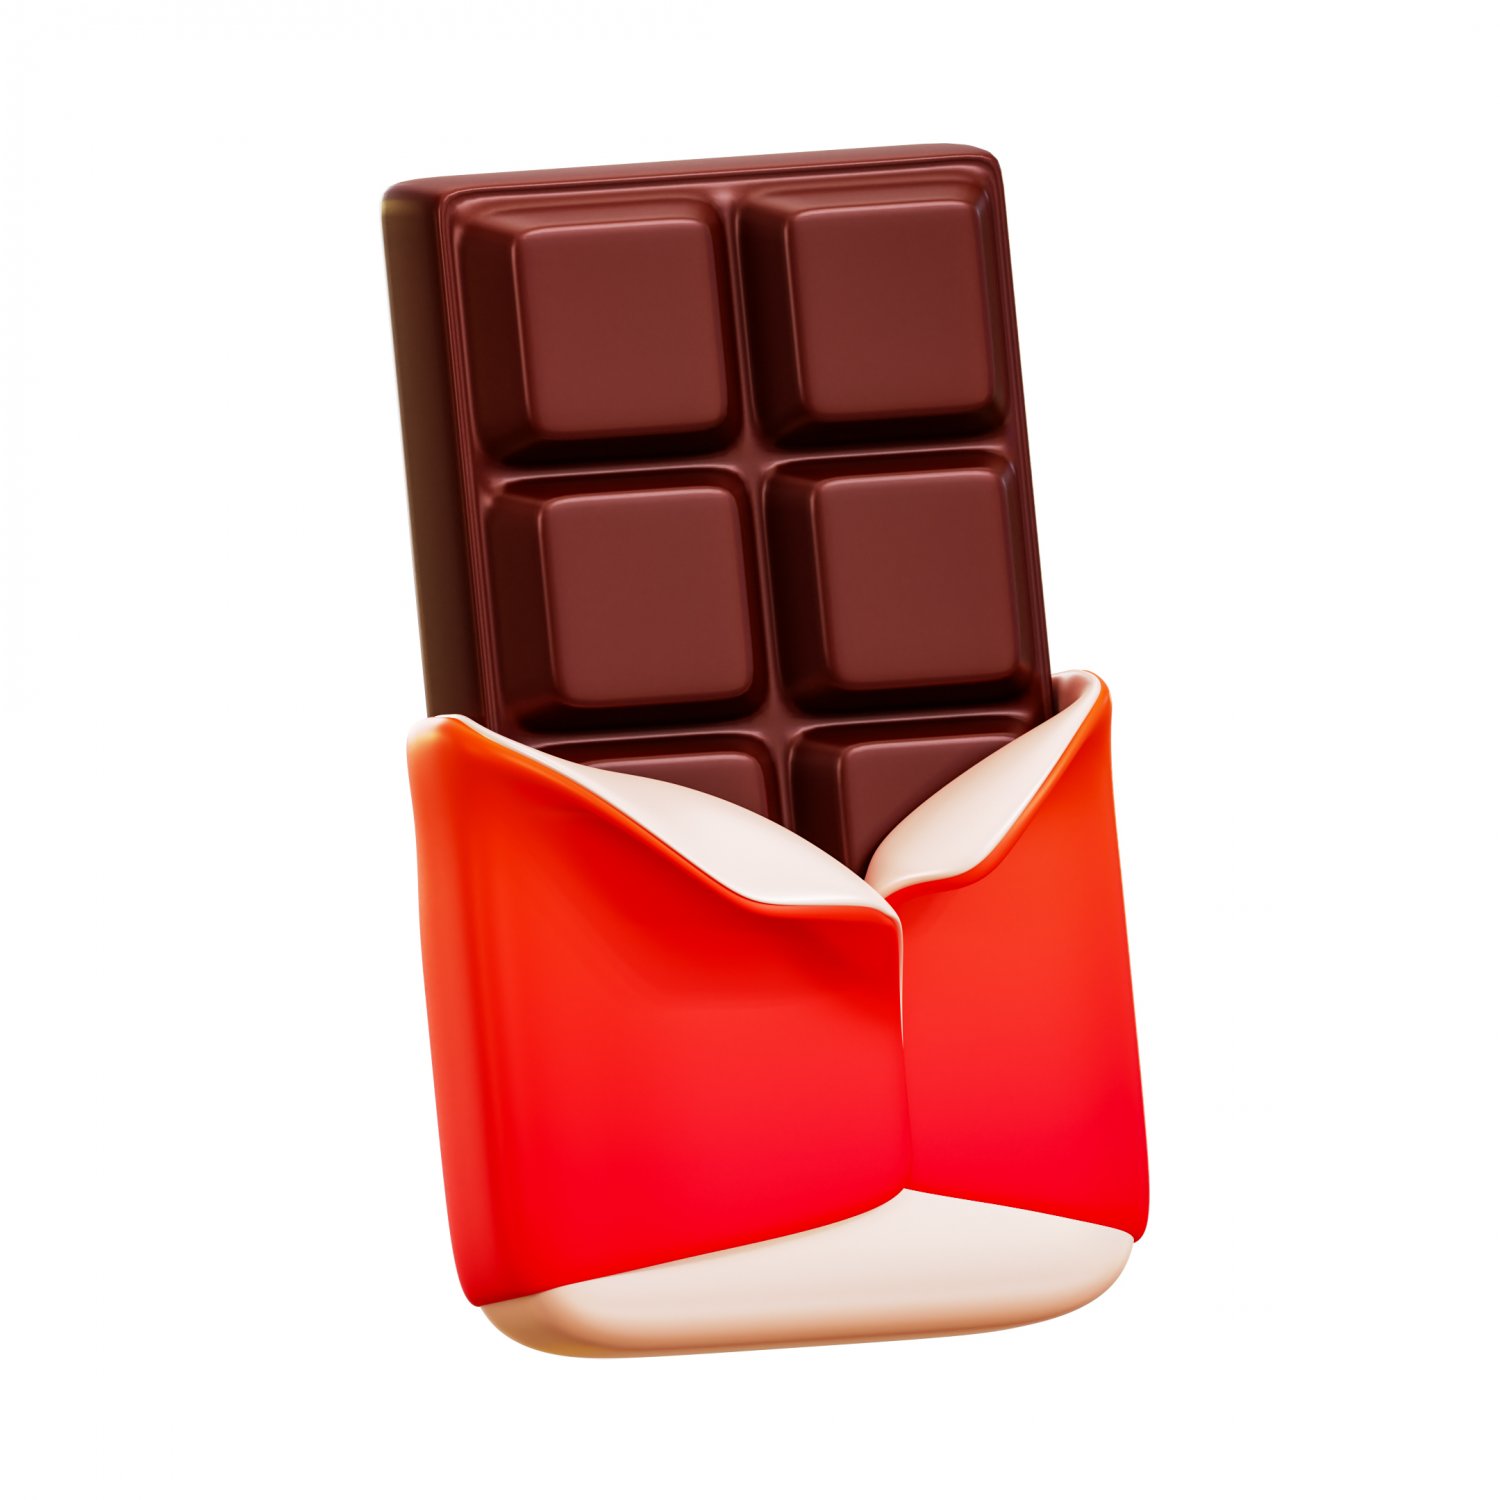 Шоколад д. Шоколадка 3д. Шоколад ПСД. Chocolate 3d model. Chocolate piece 3d model.